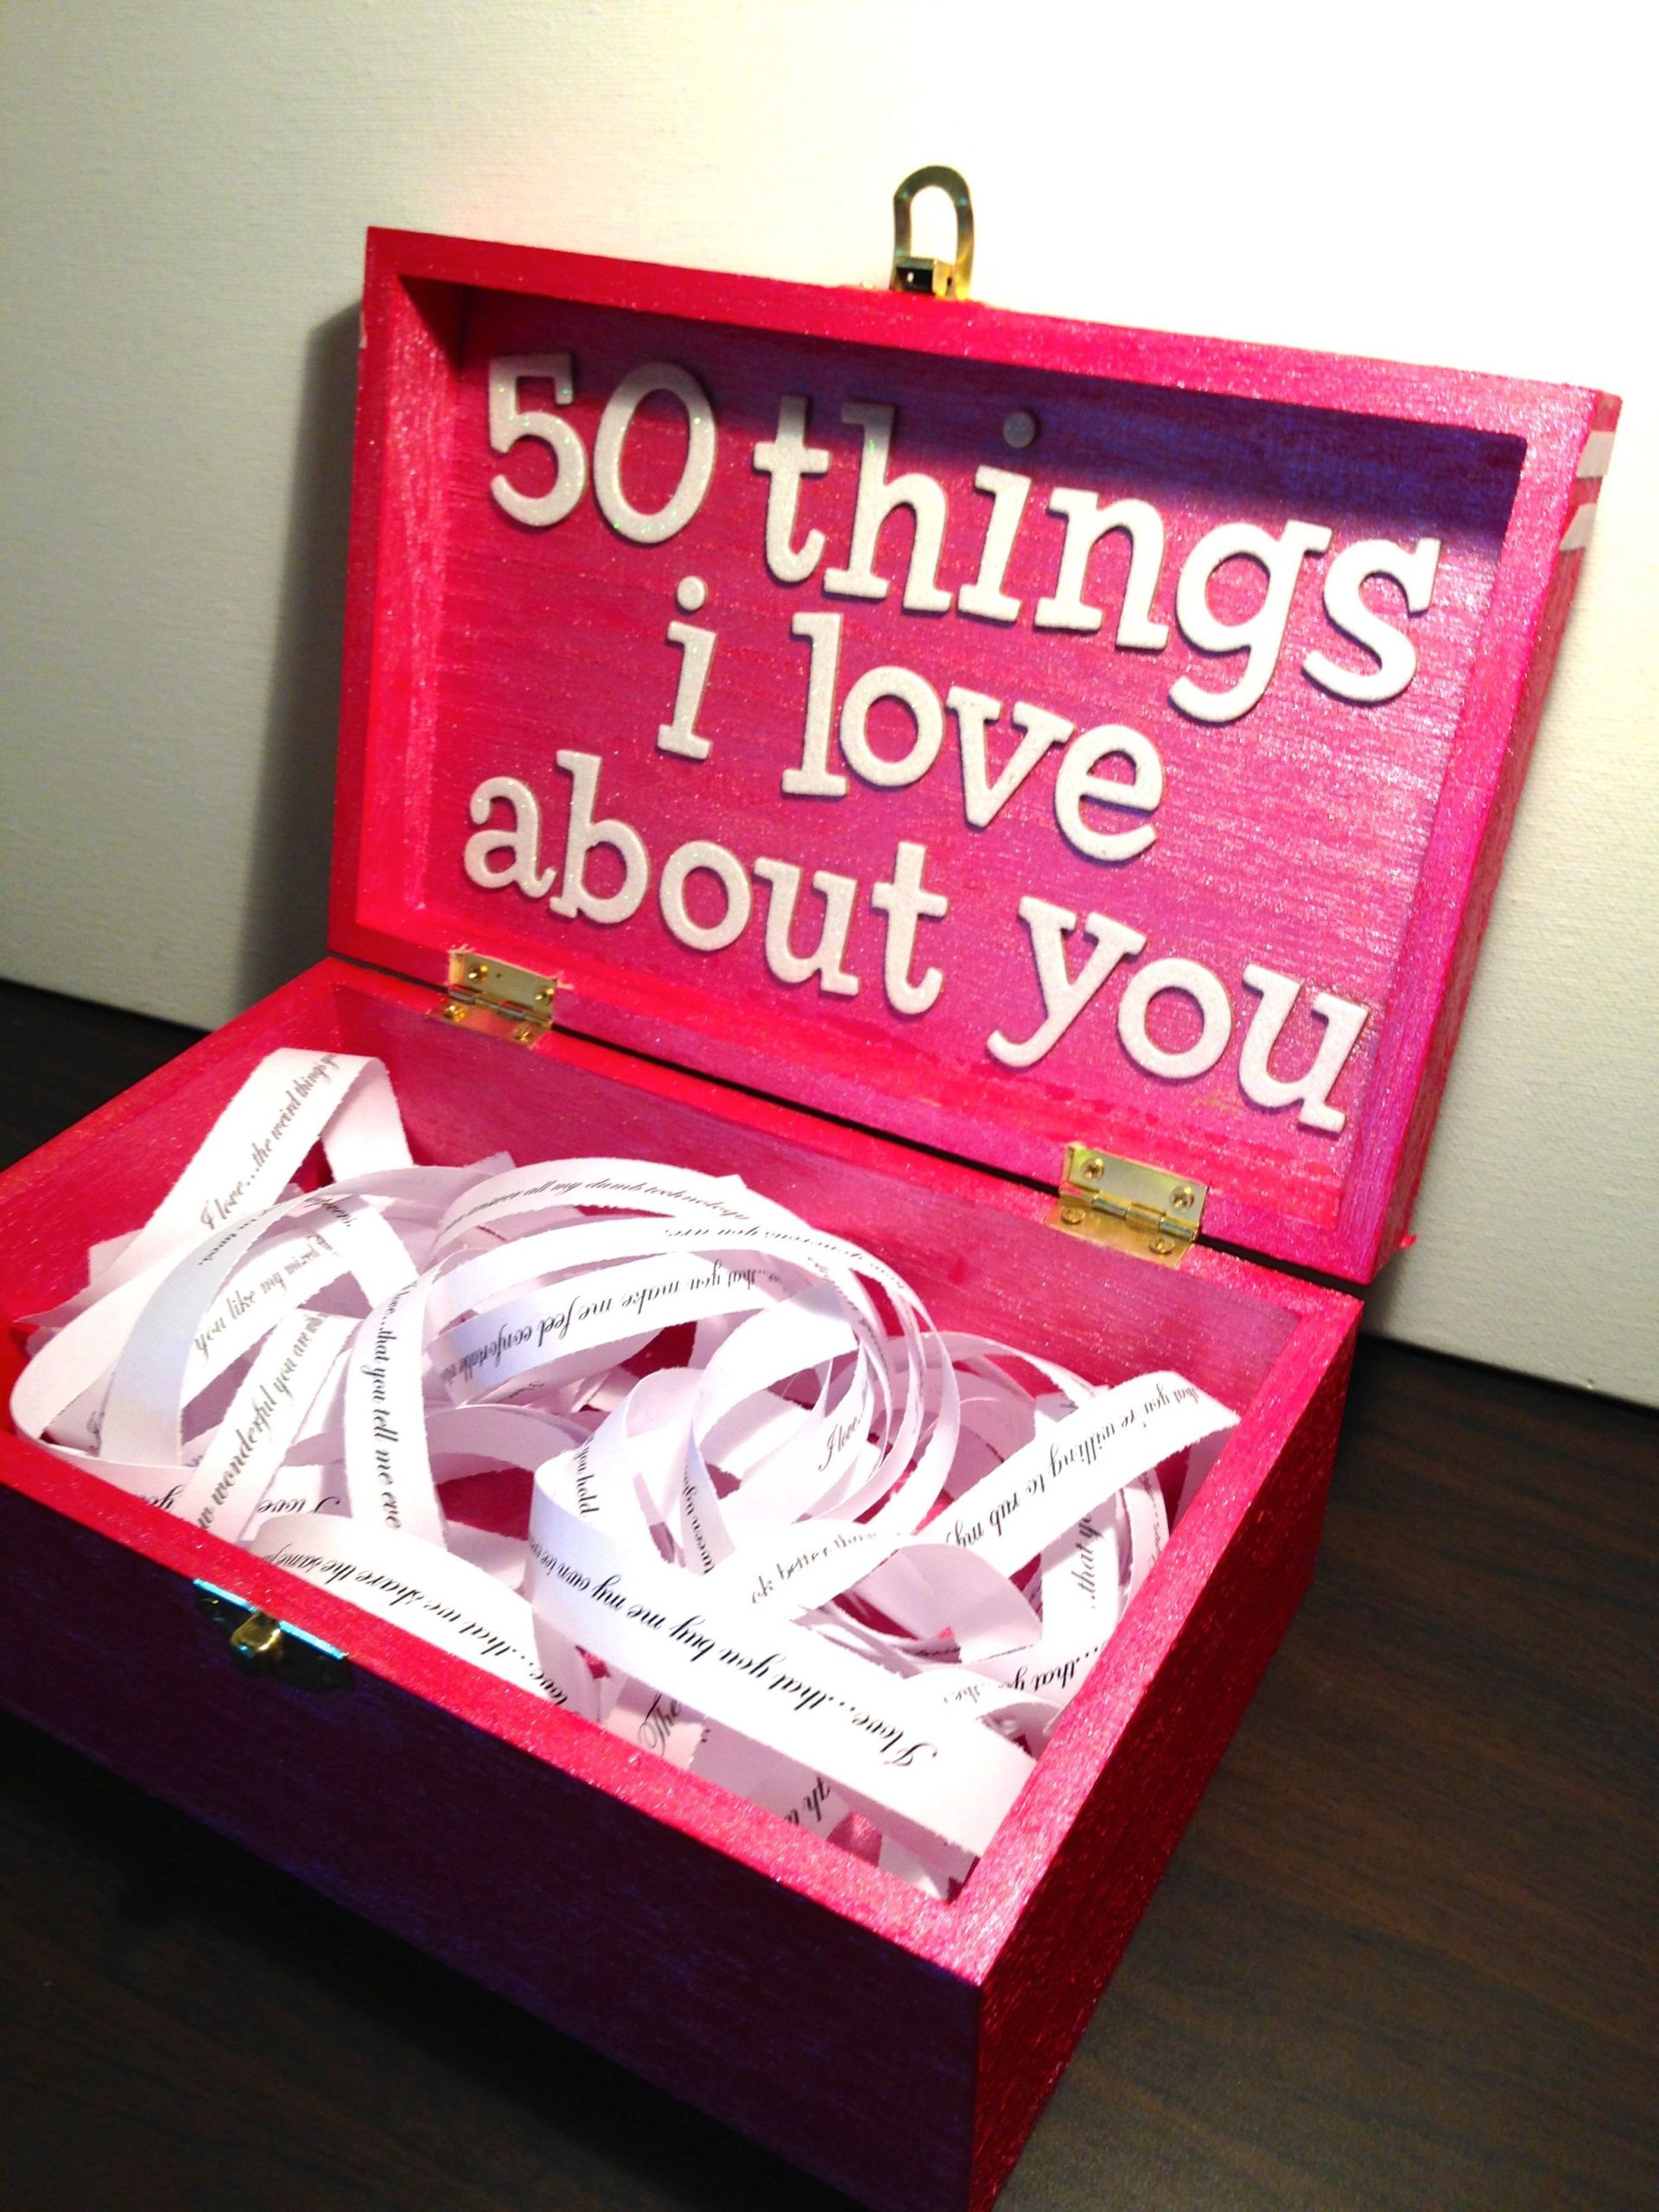 I Love You Gift Ideas For Girlfriend
 Boyfriend Girlfriend t ideas for birthday valentine